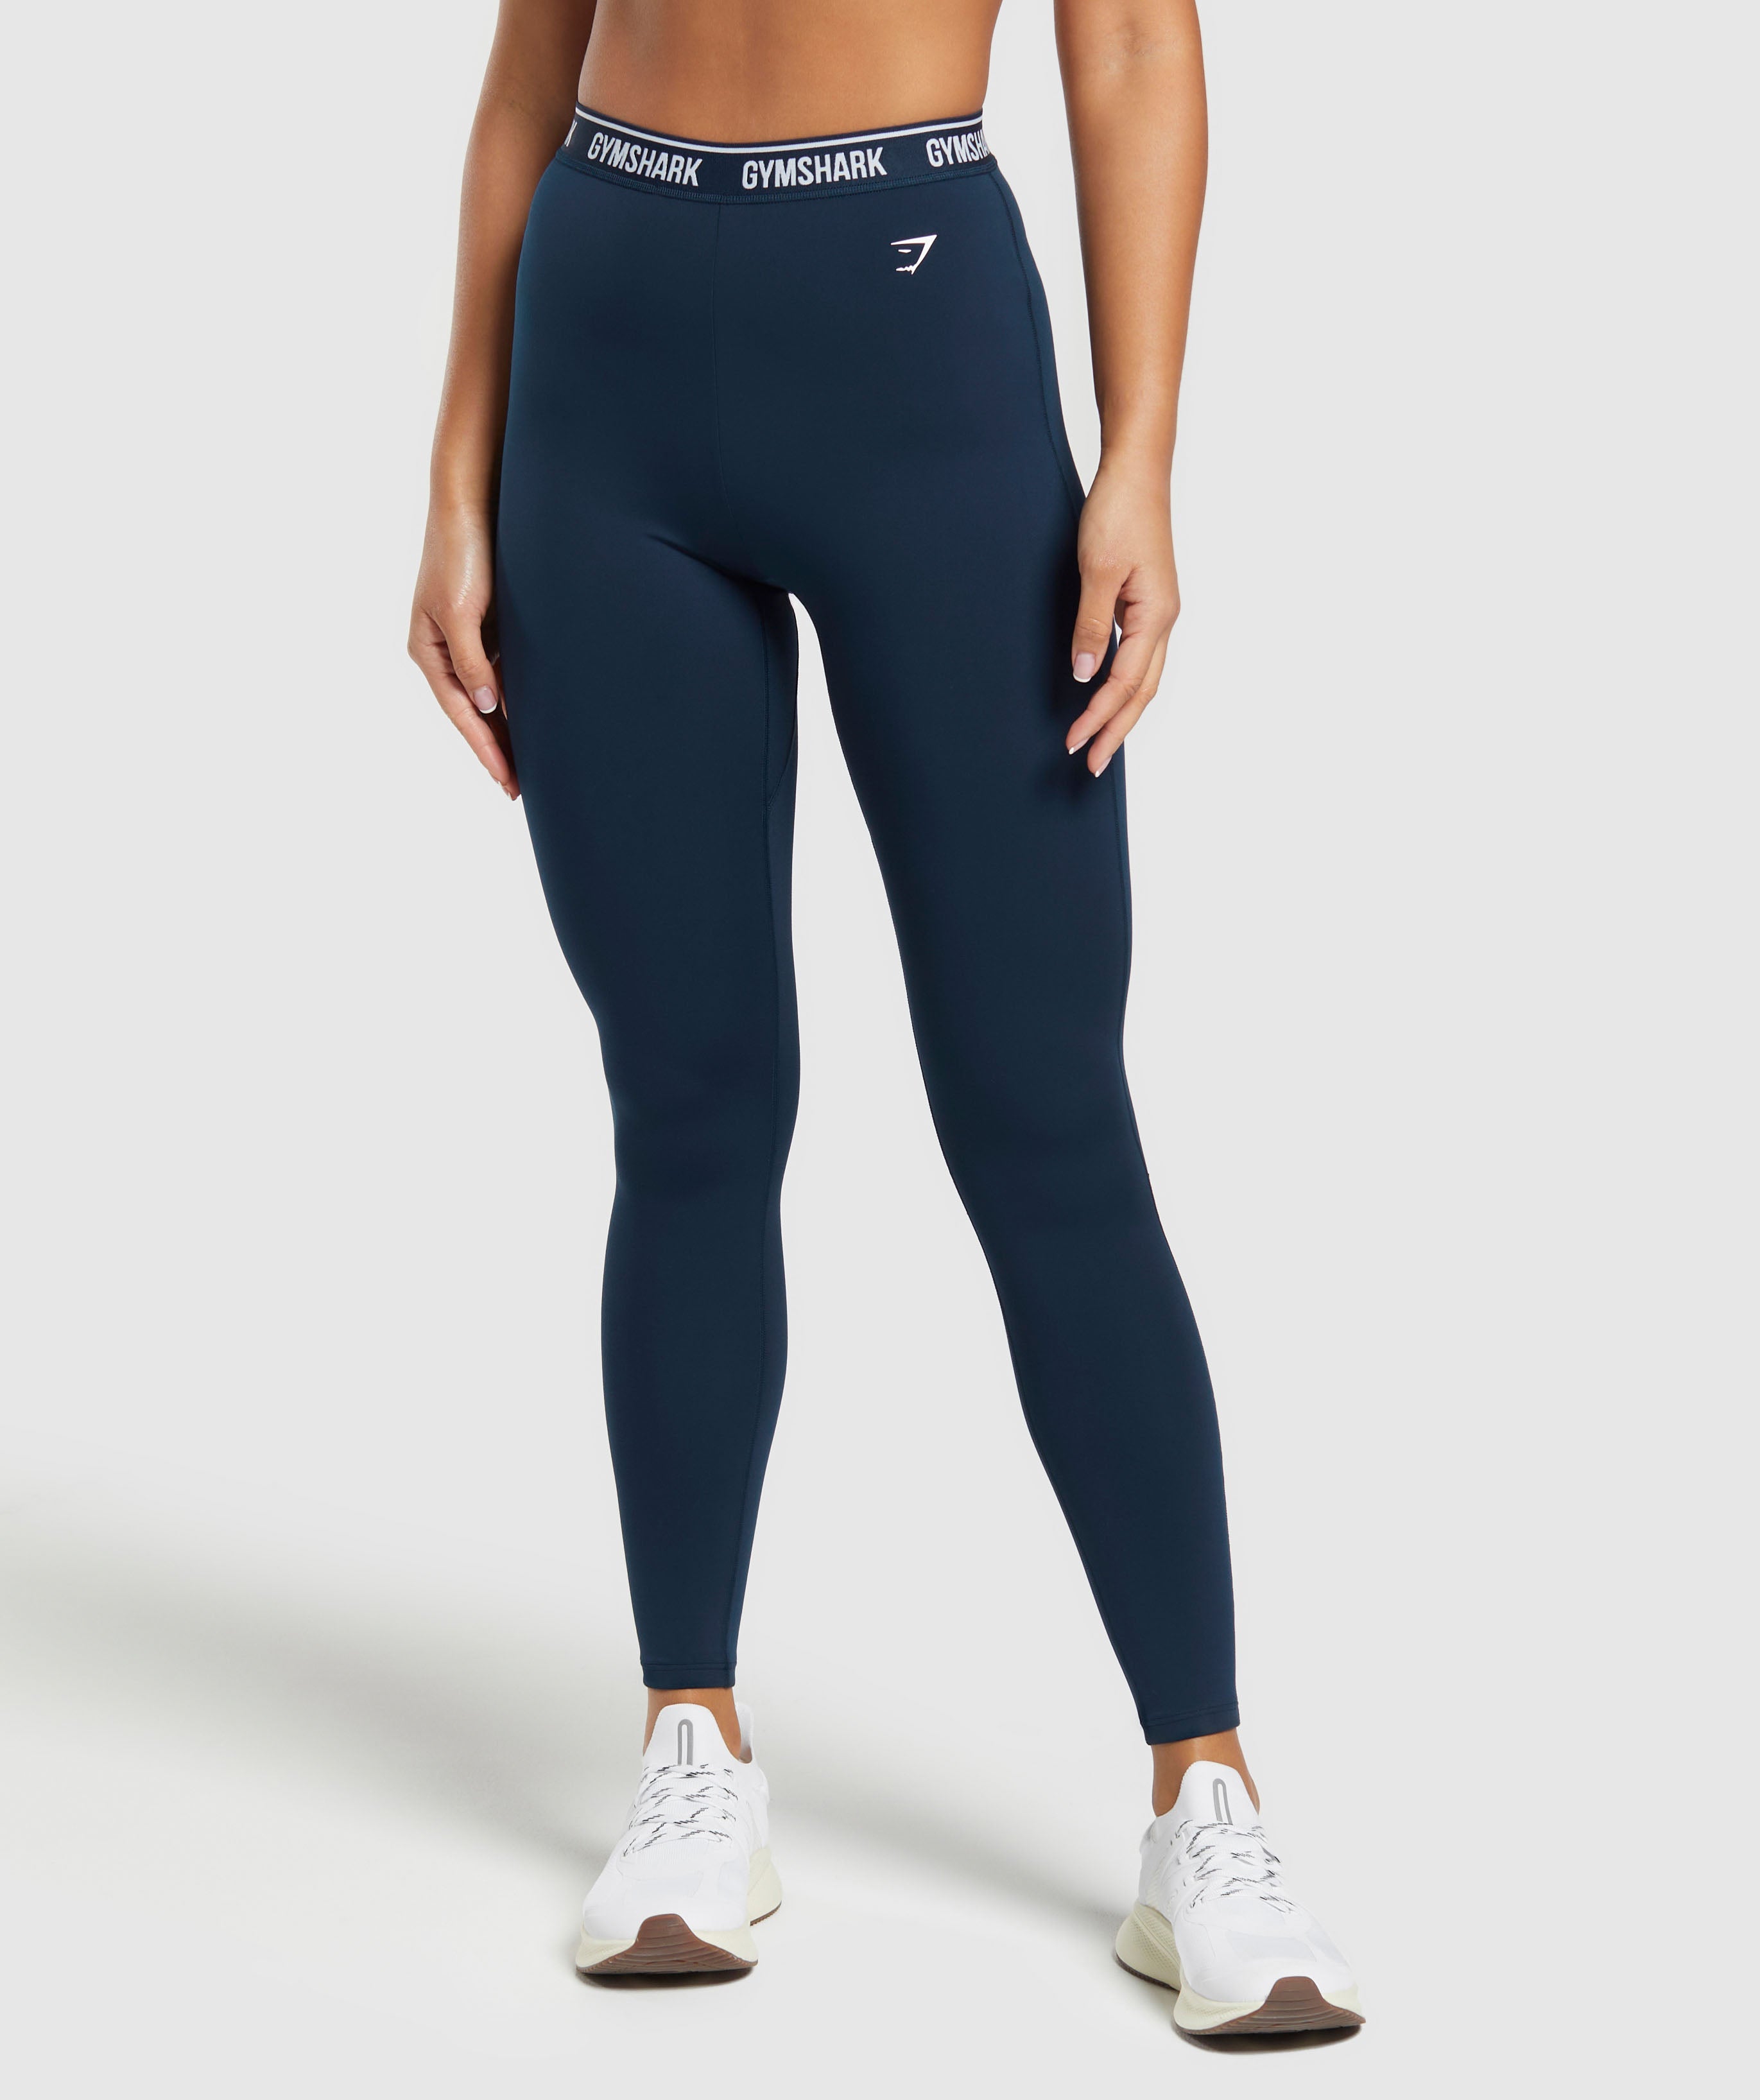 Women's Gym Pants, Workout Clothes